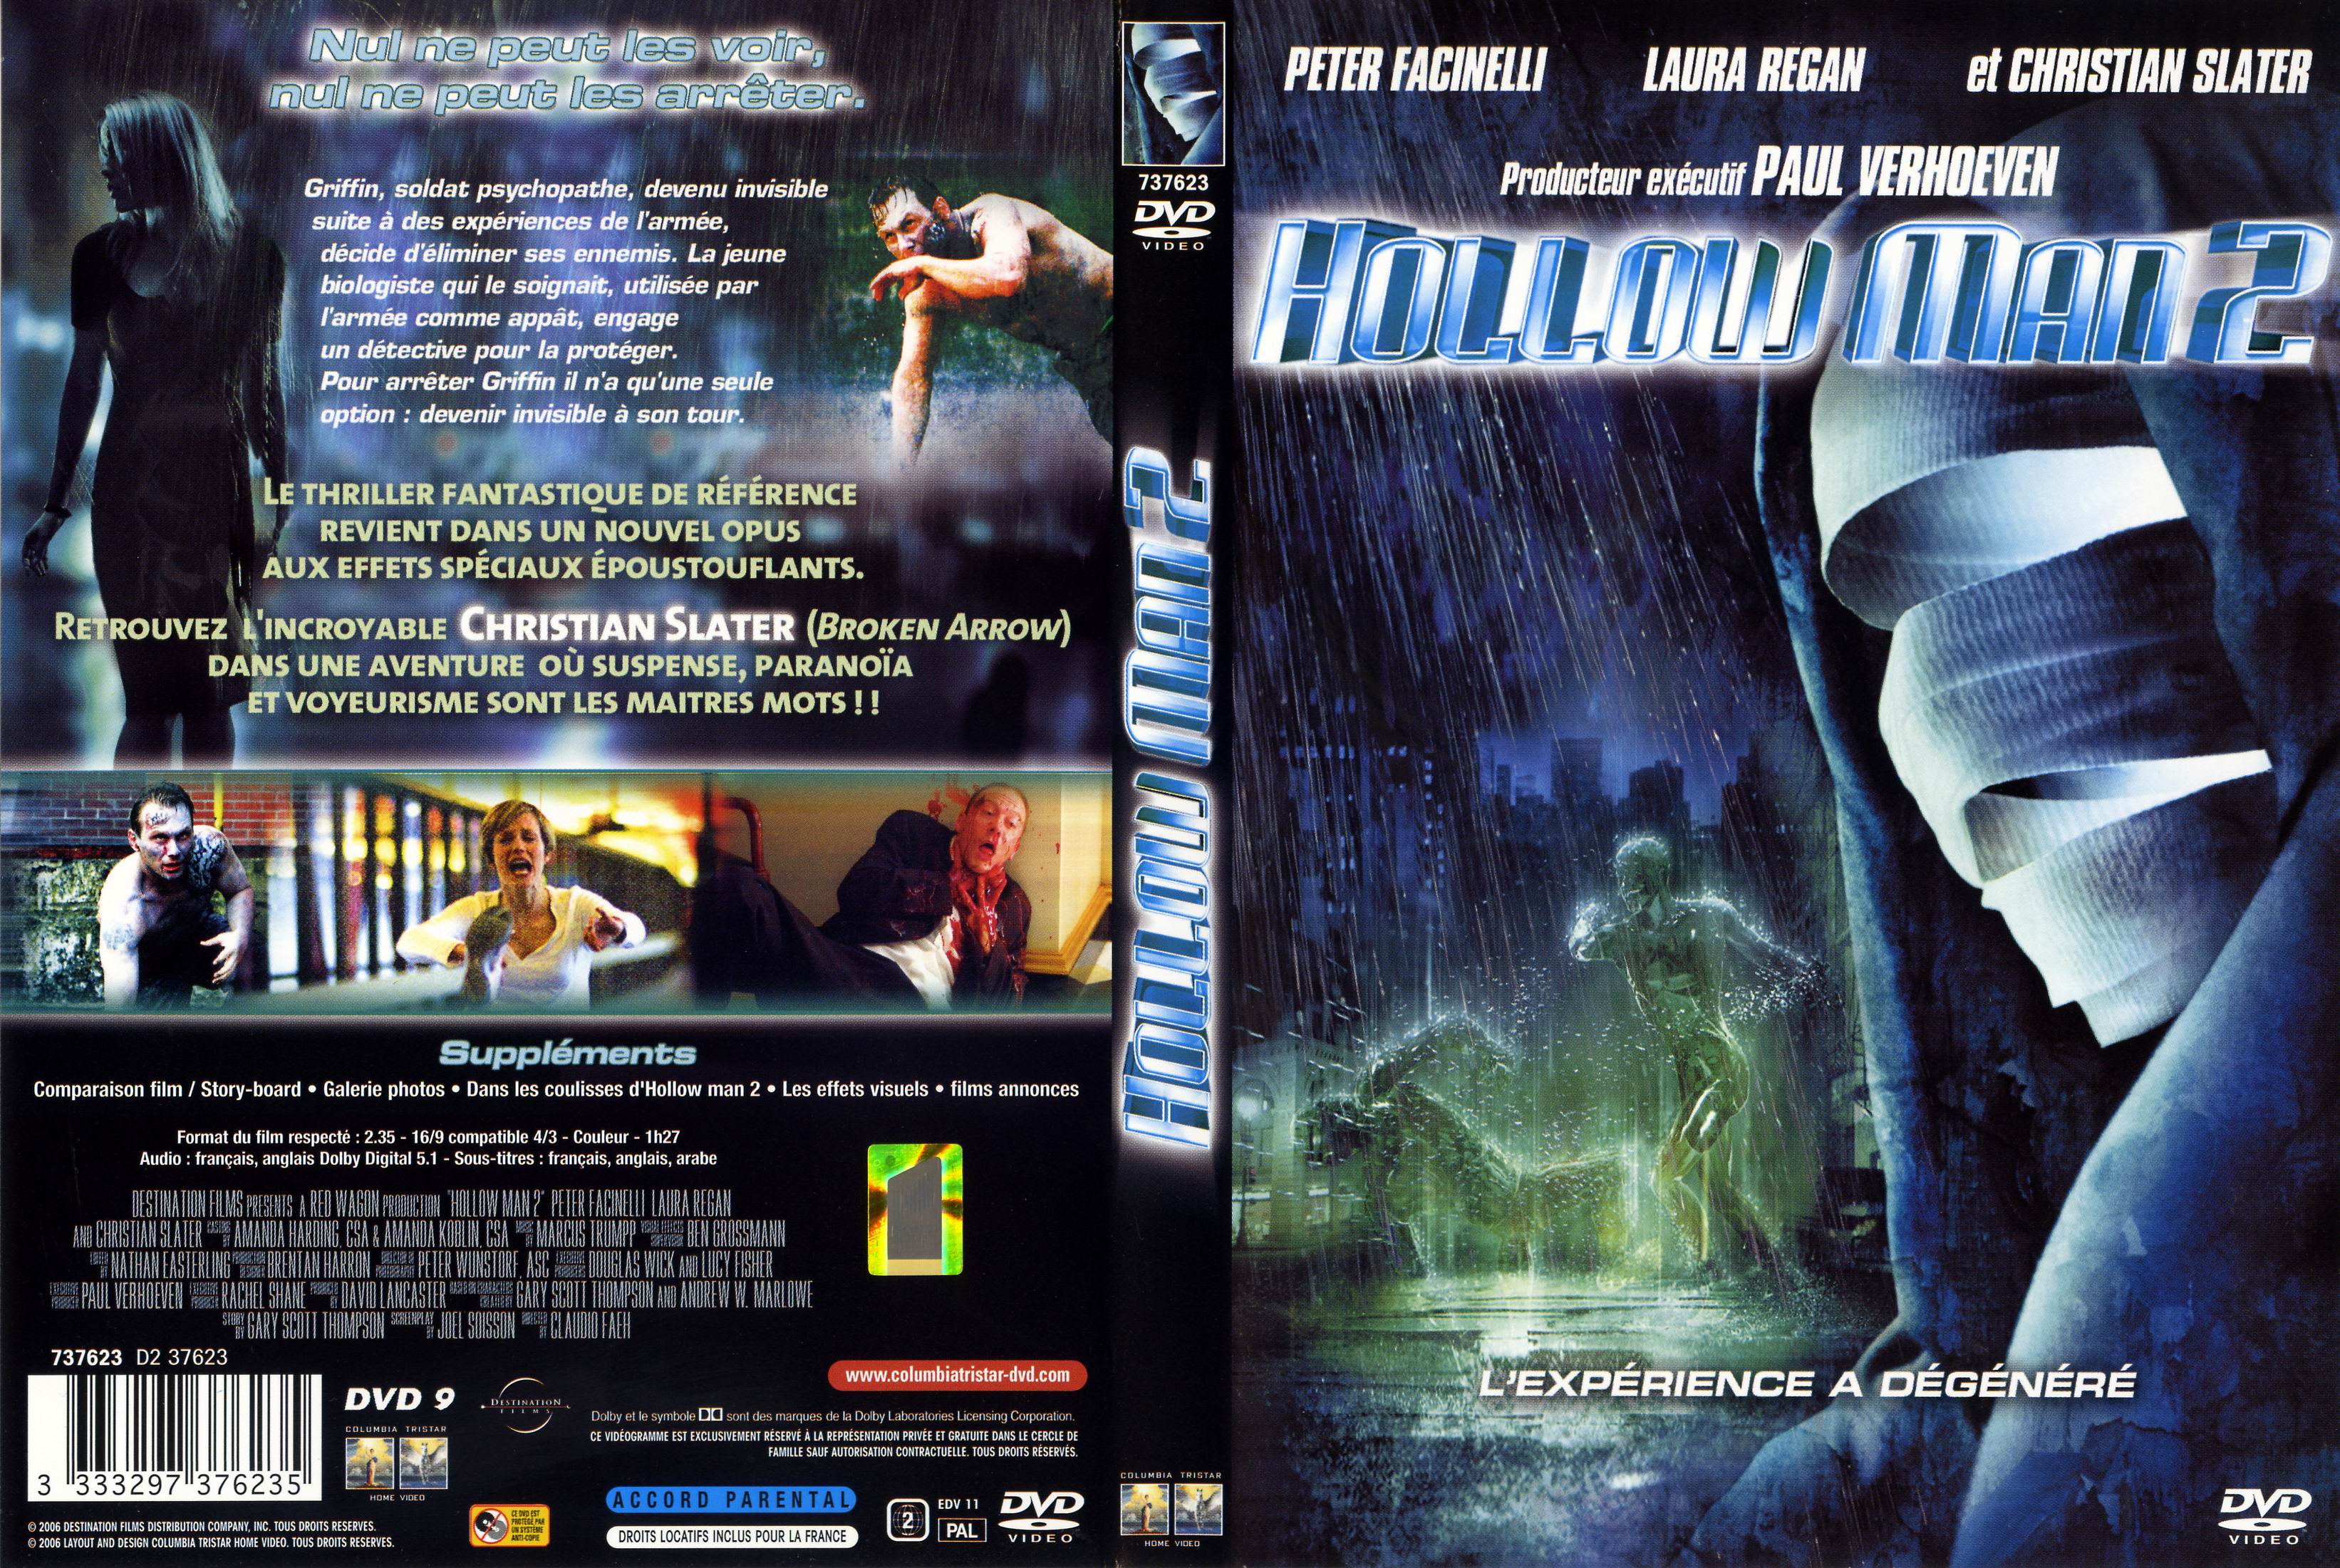 Jaquette DVD Hollow man 2 v2